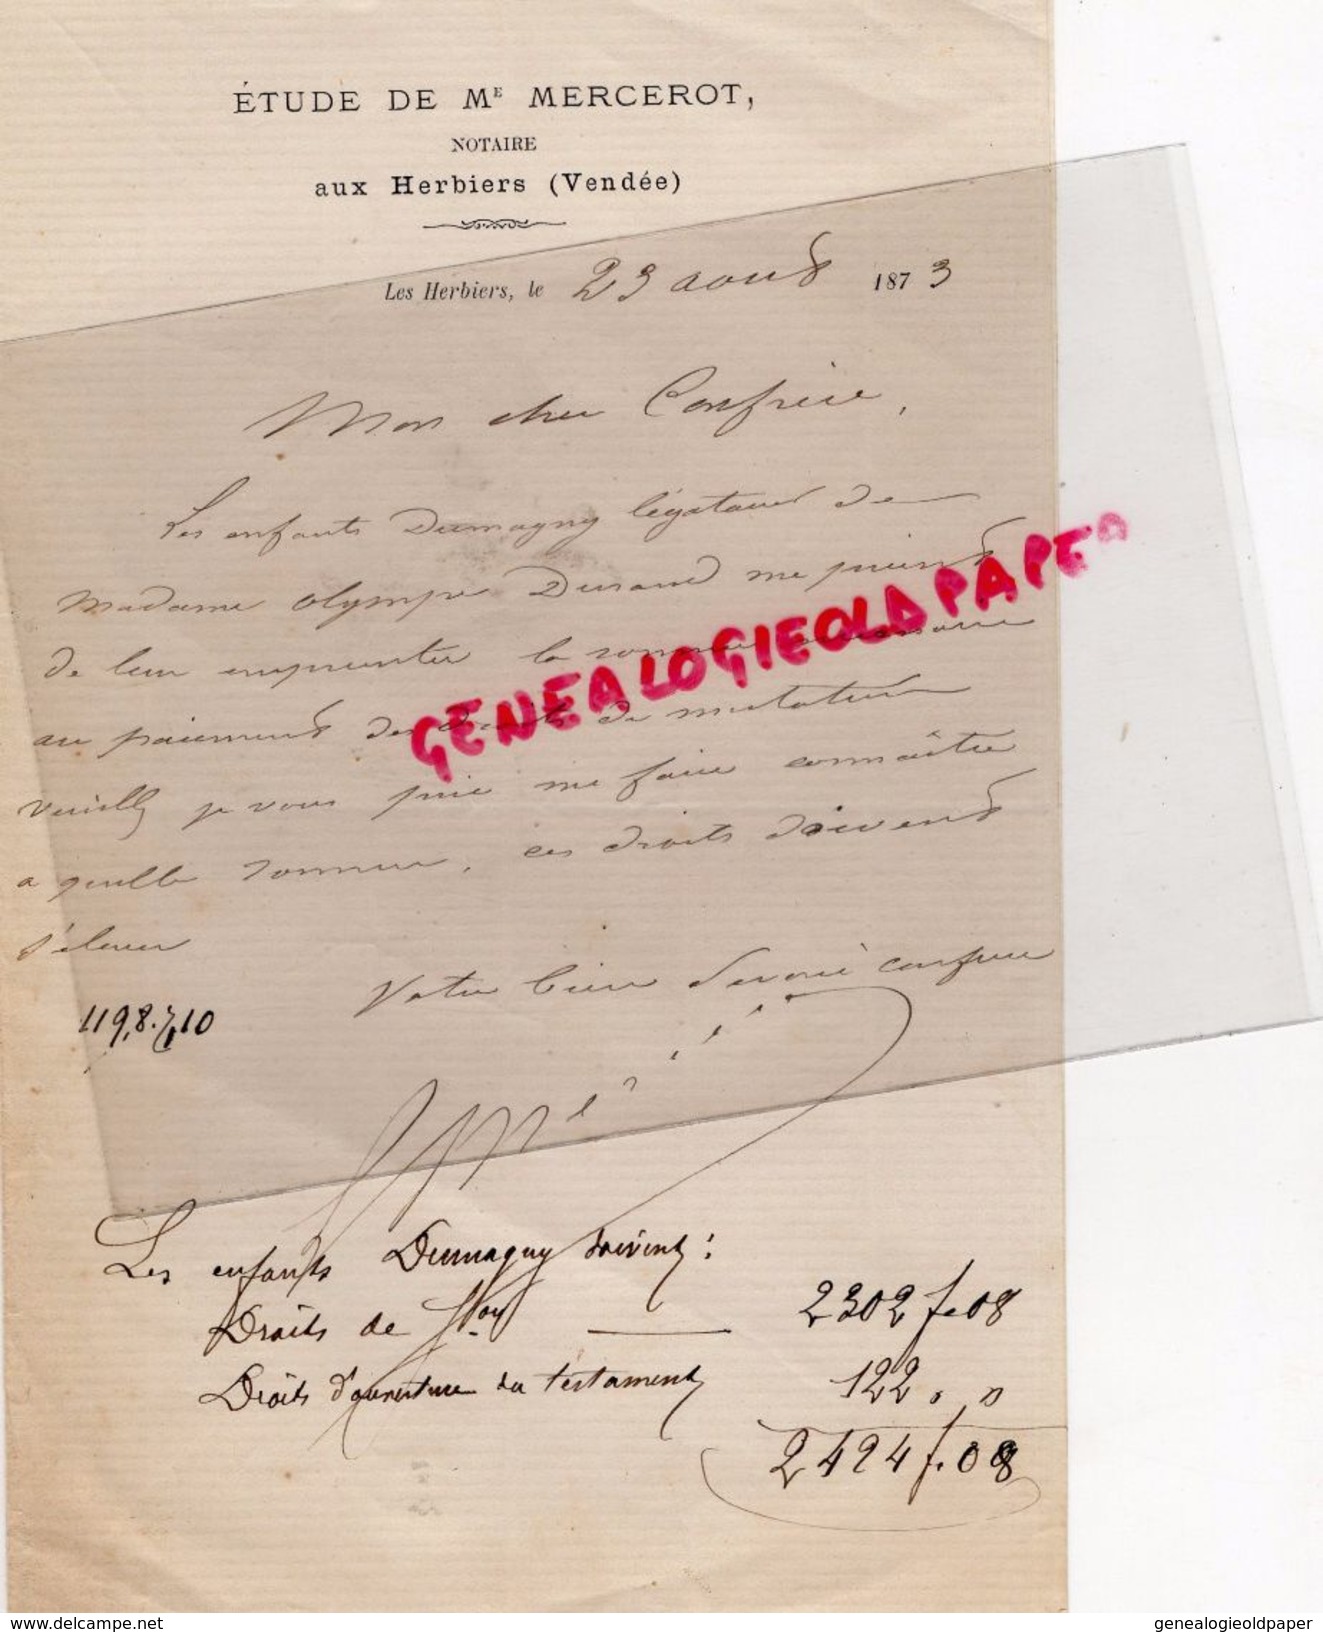 85 - AUX HERBIERS- LETTRE ETUDE ME MERCEROT-NOTAIRE-1873 - Historical Documents